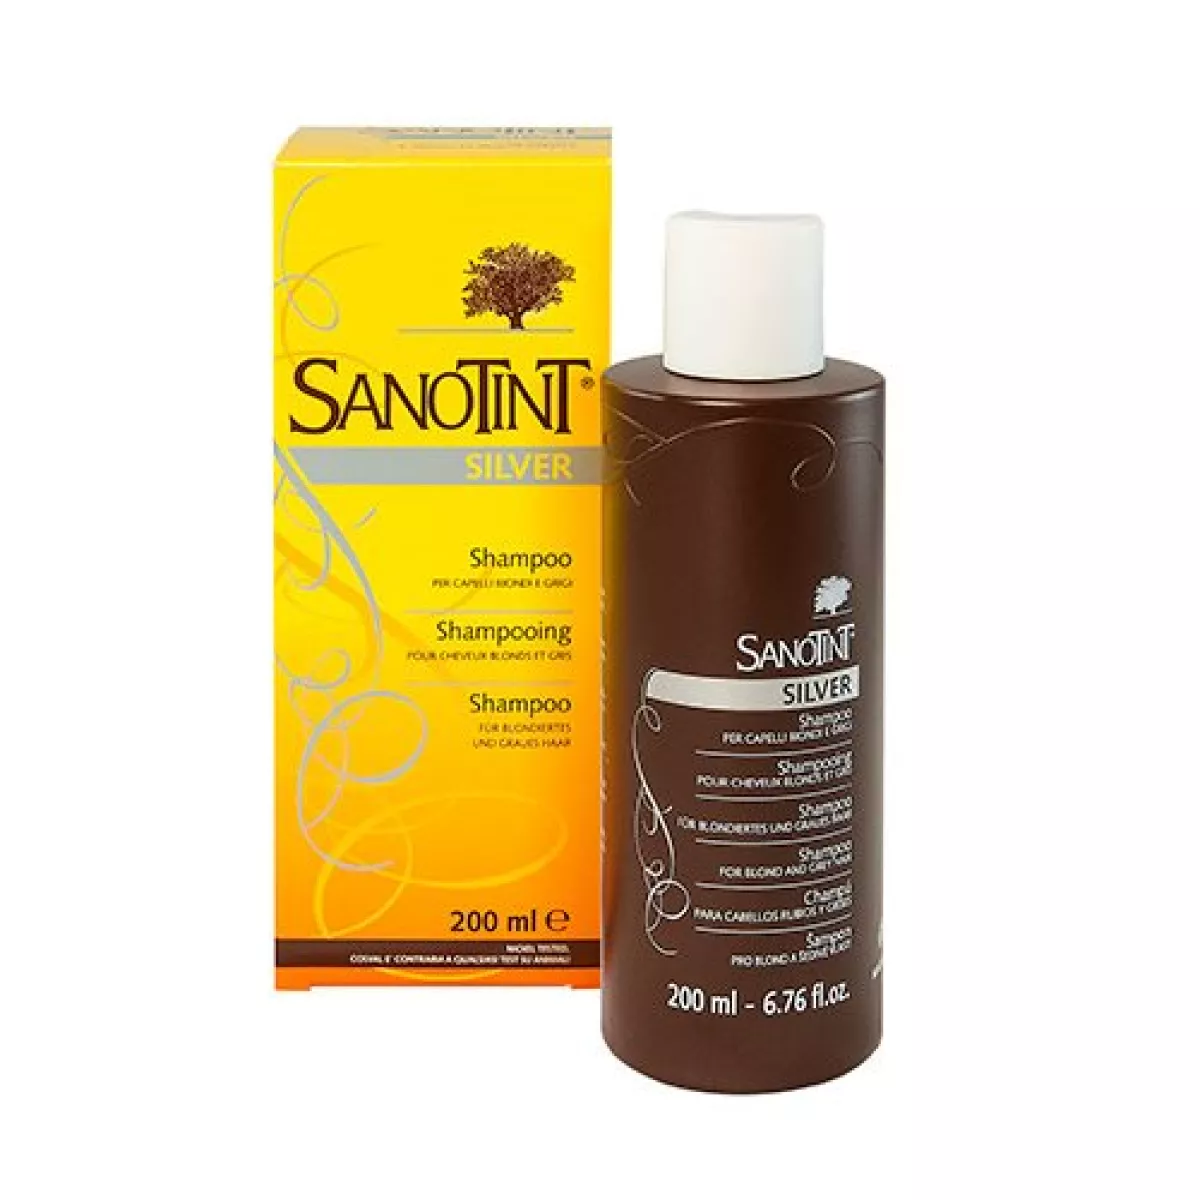 #1 - Sanotint Silver Shampoo